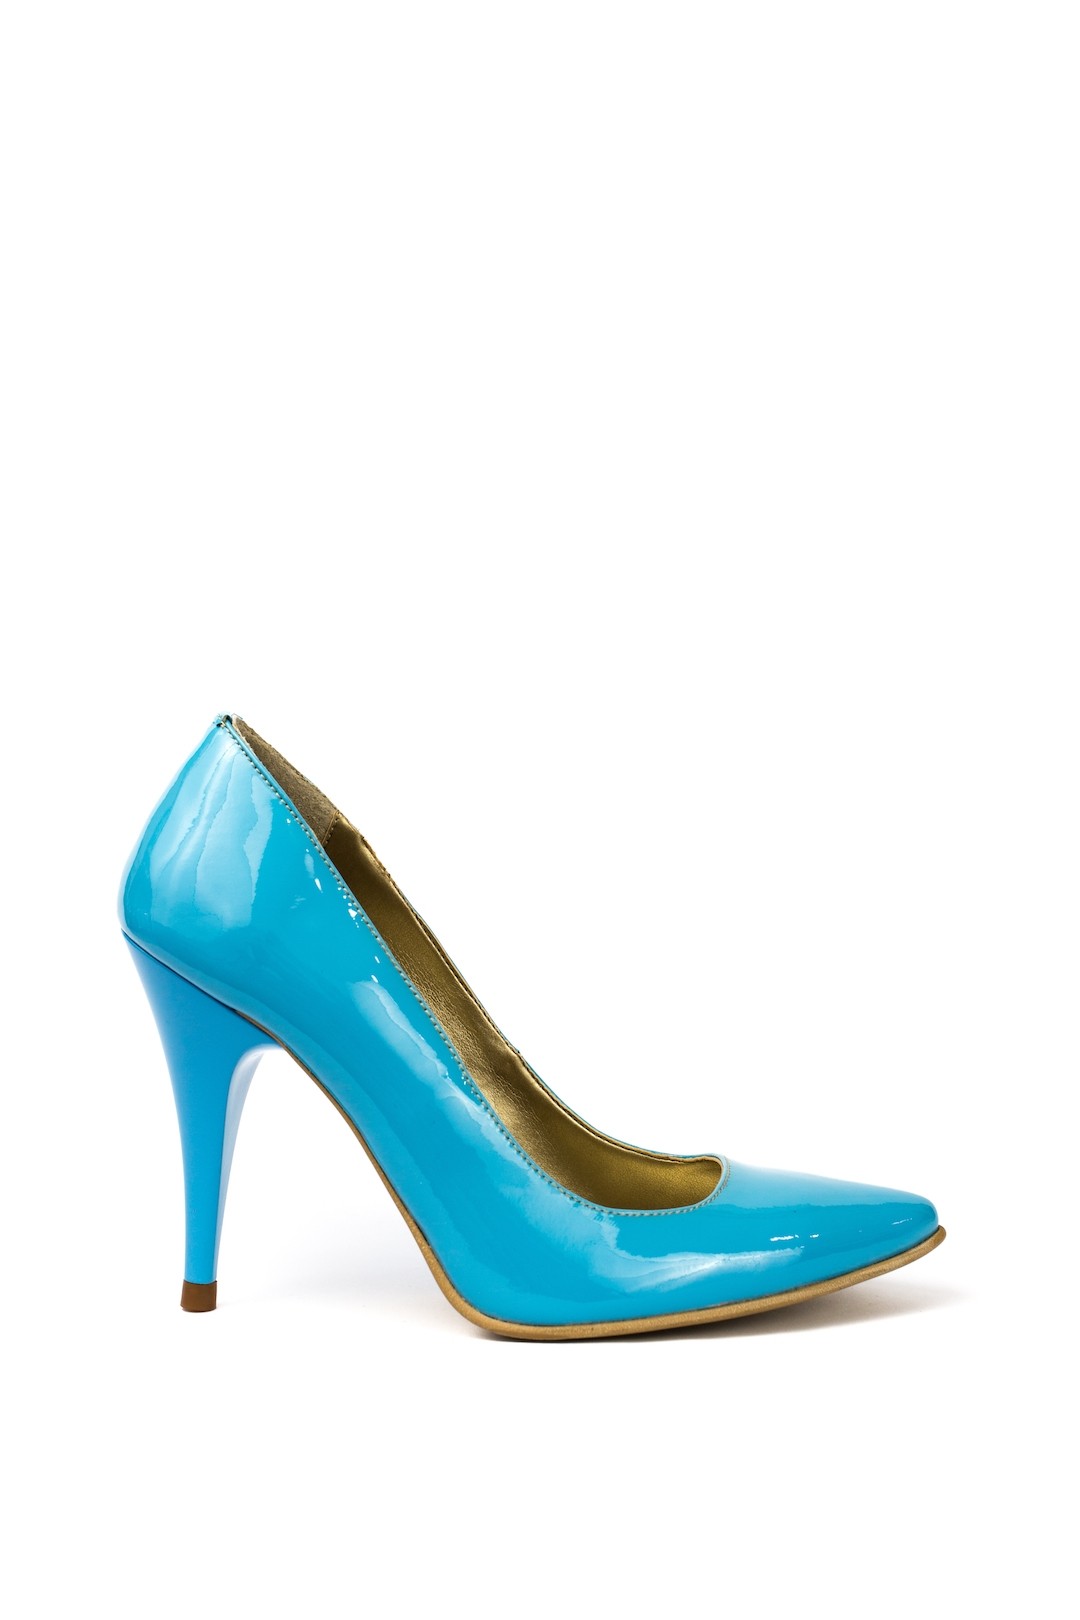 Pantofi Dama piele naturala albastru Elvira